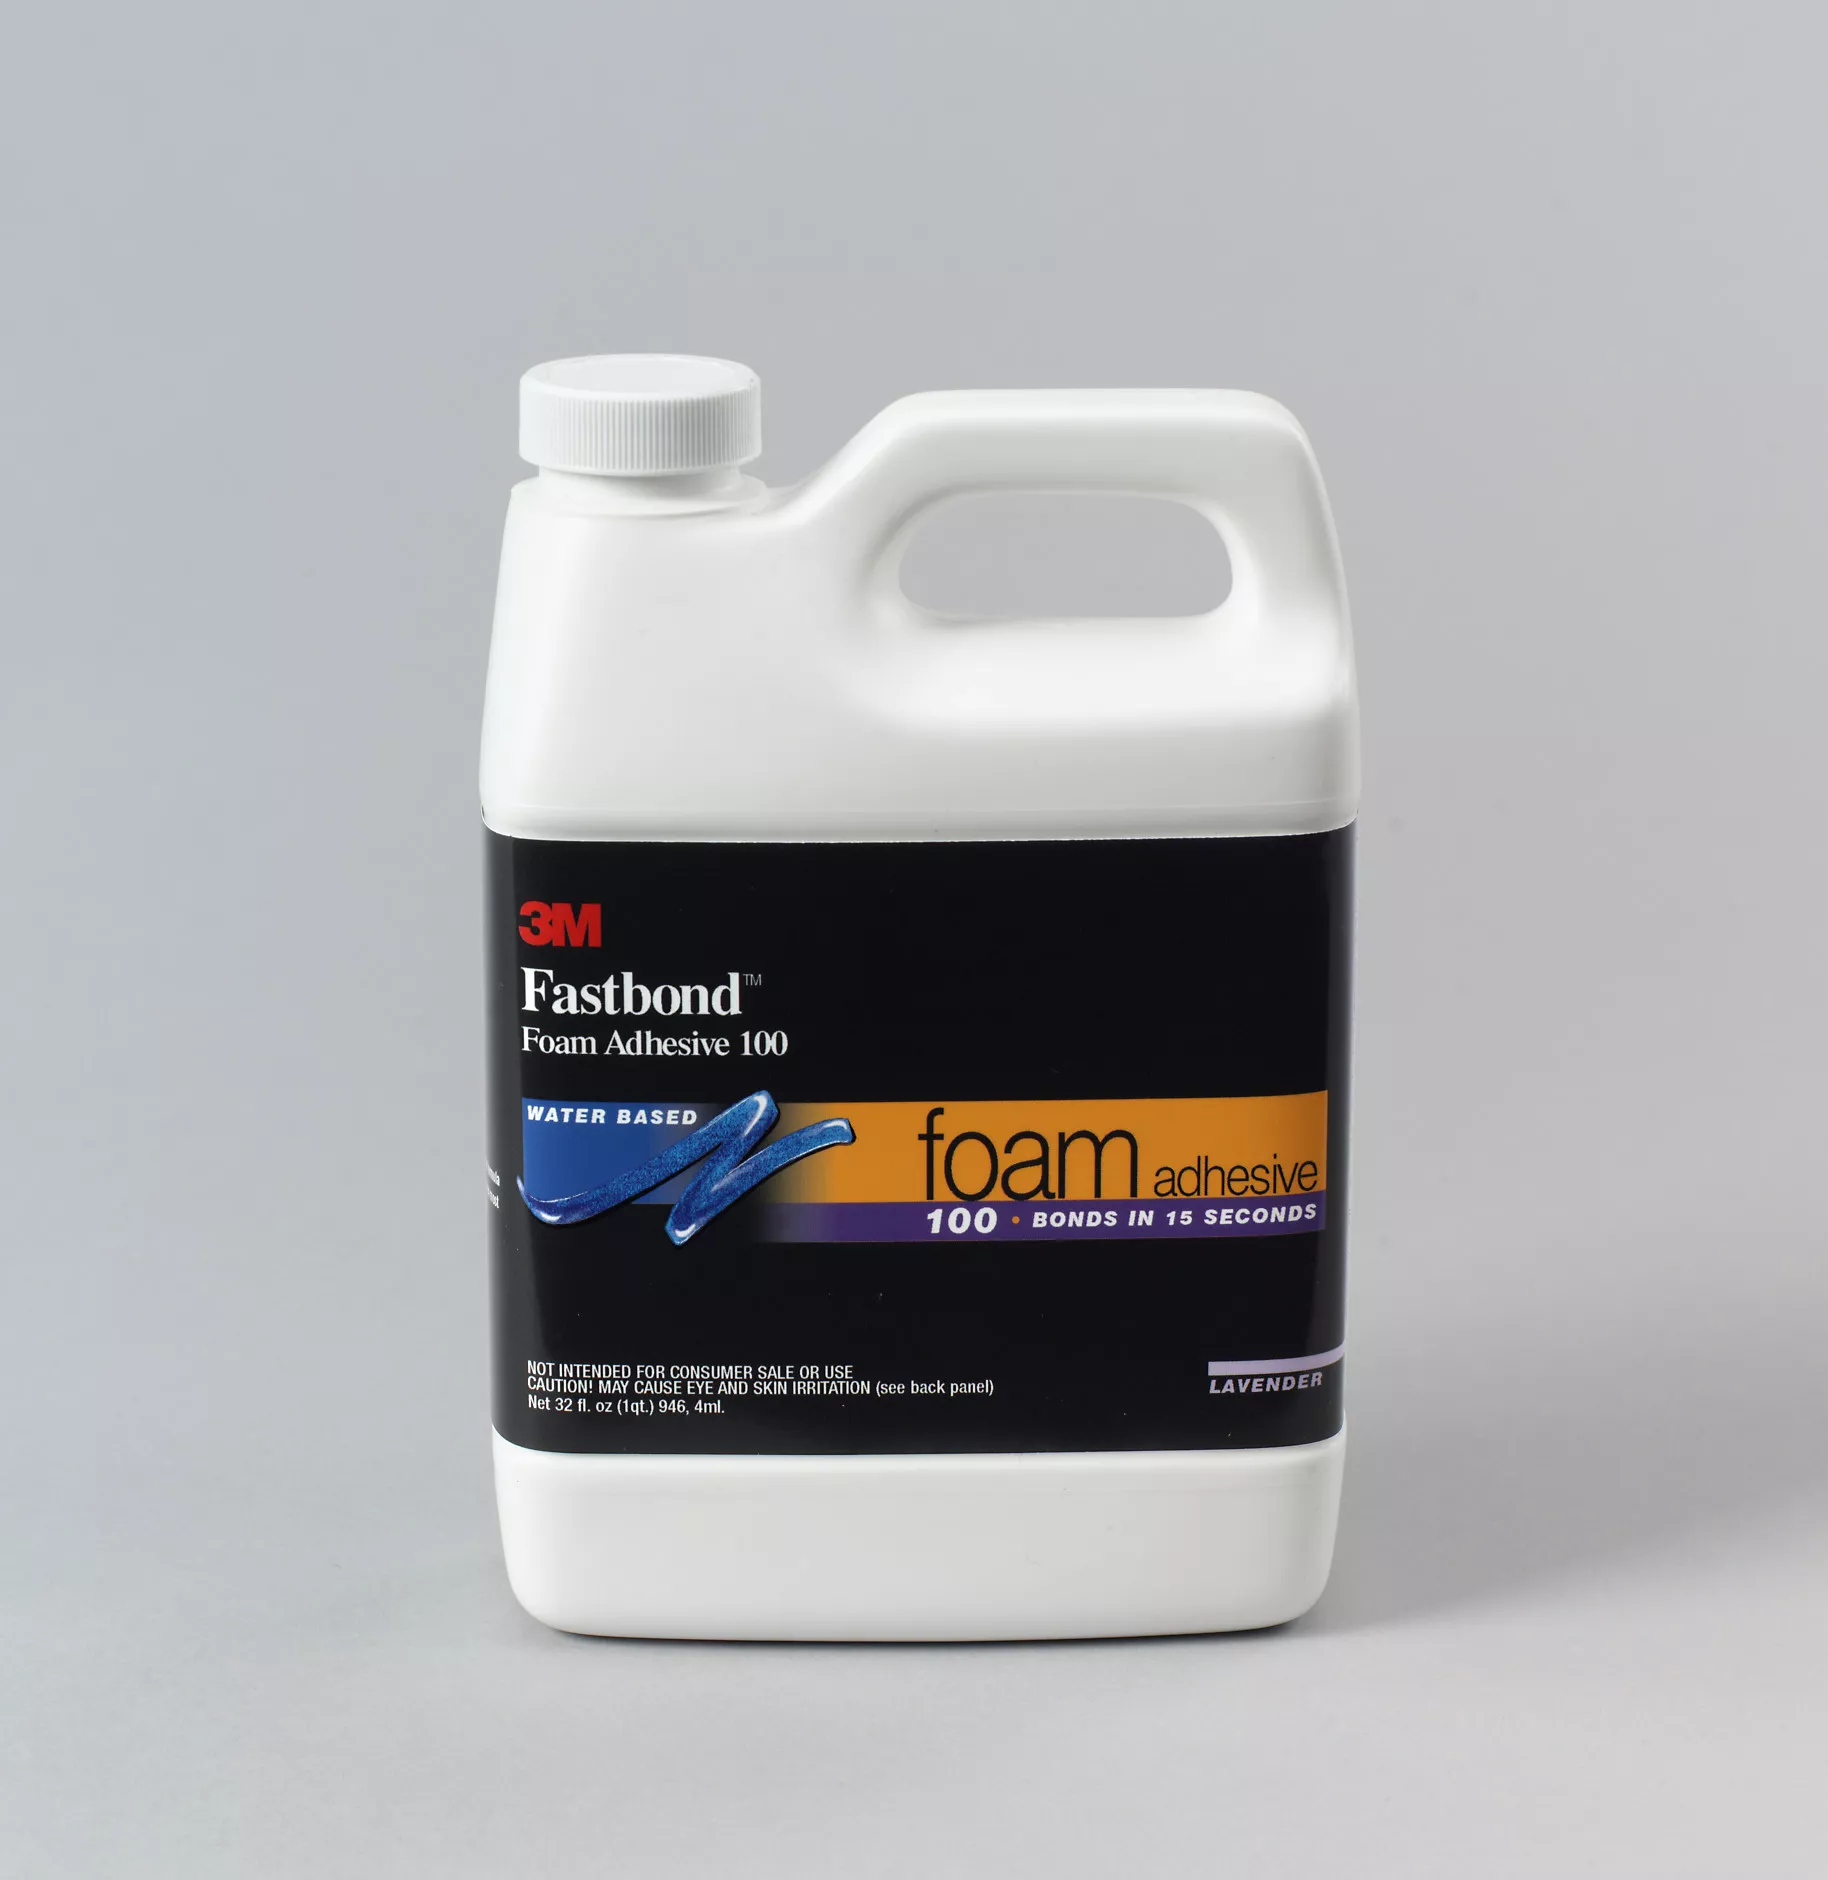 3M™ Fastbond™ Foam Adhesive 100NF, Lavender, 55 Gallon Poly Closed Head
(52 Gallon Net), Drum